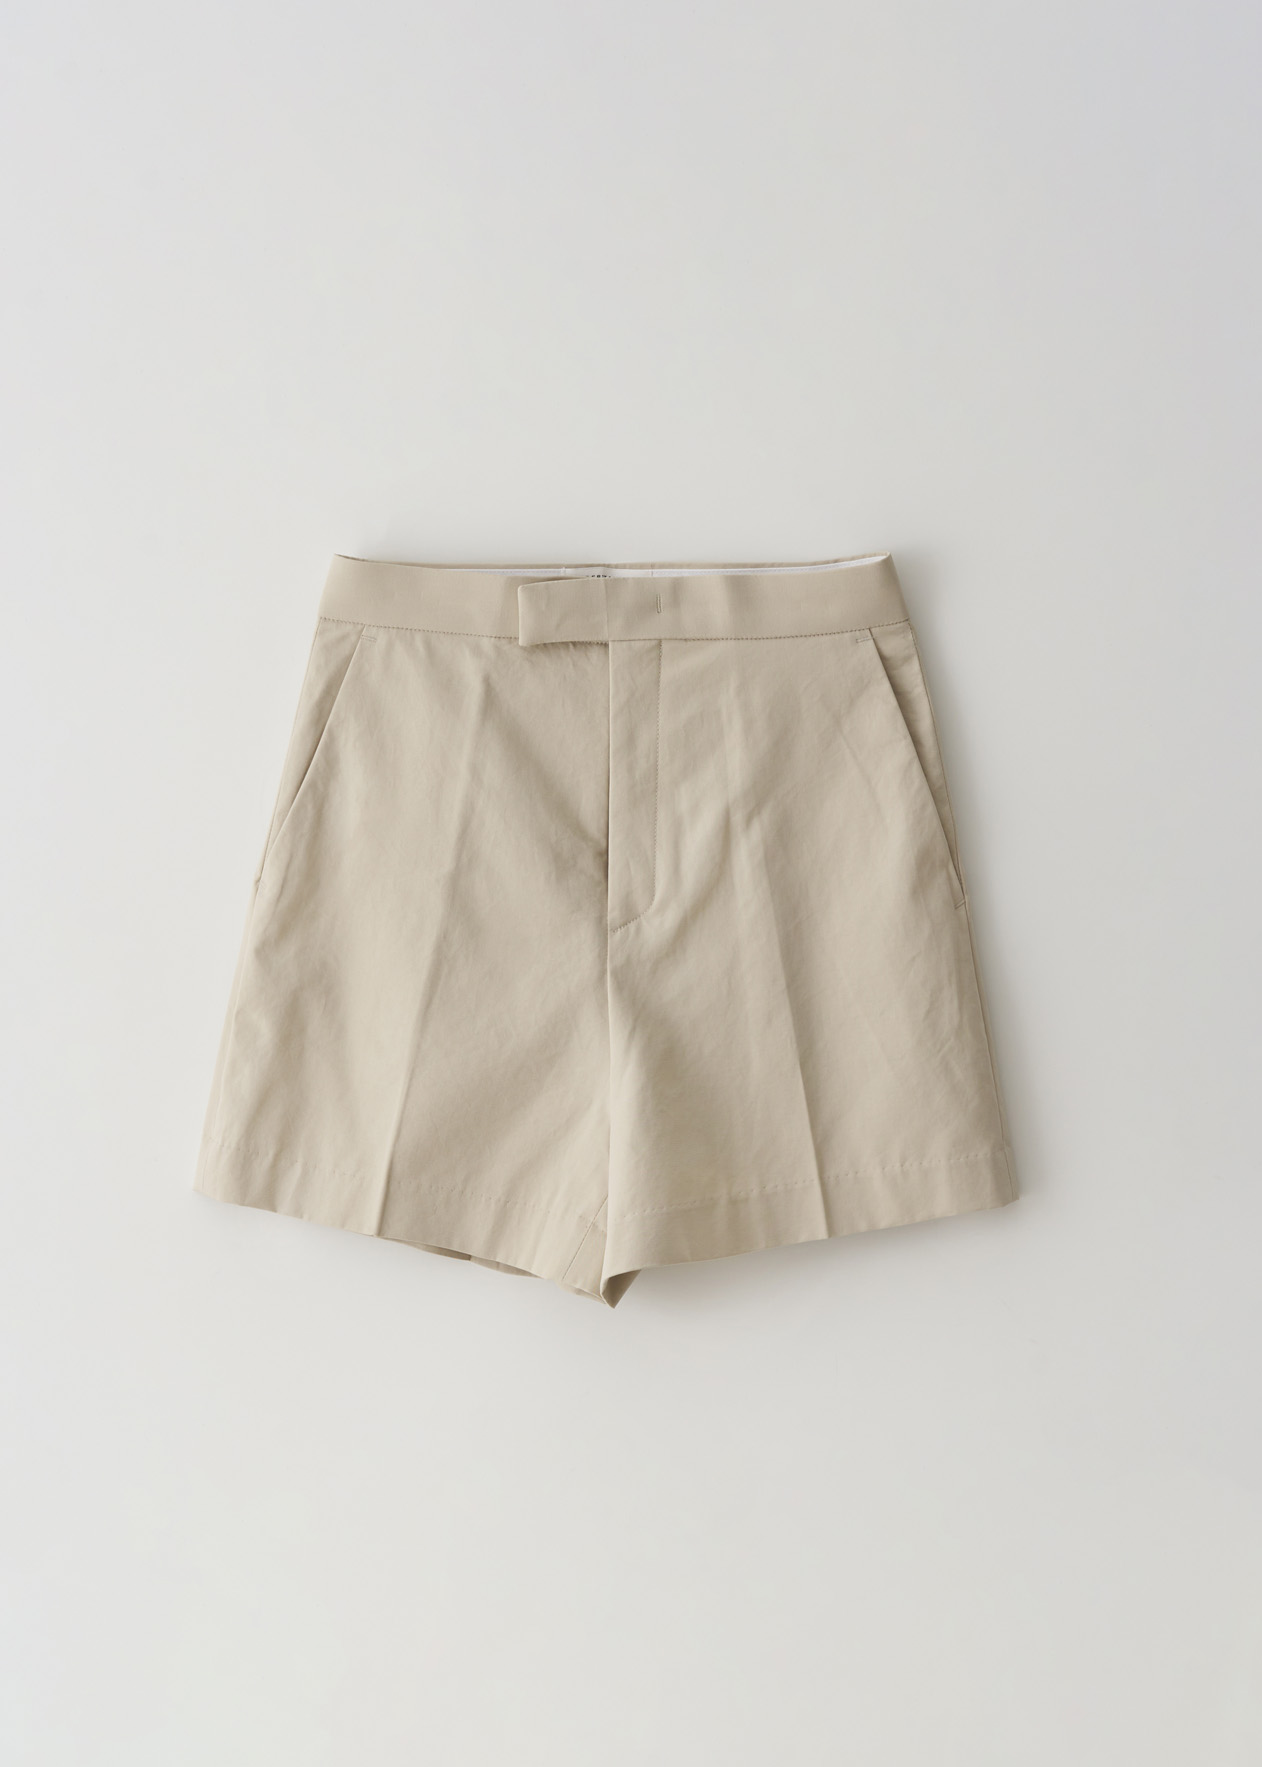 Terra shorts